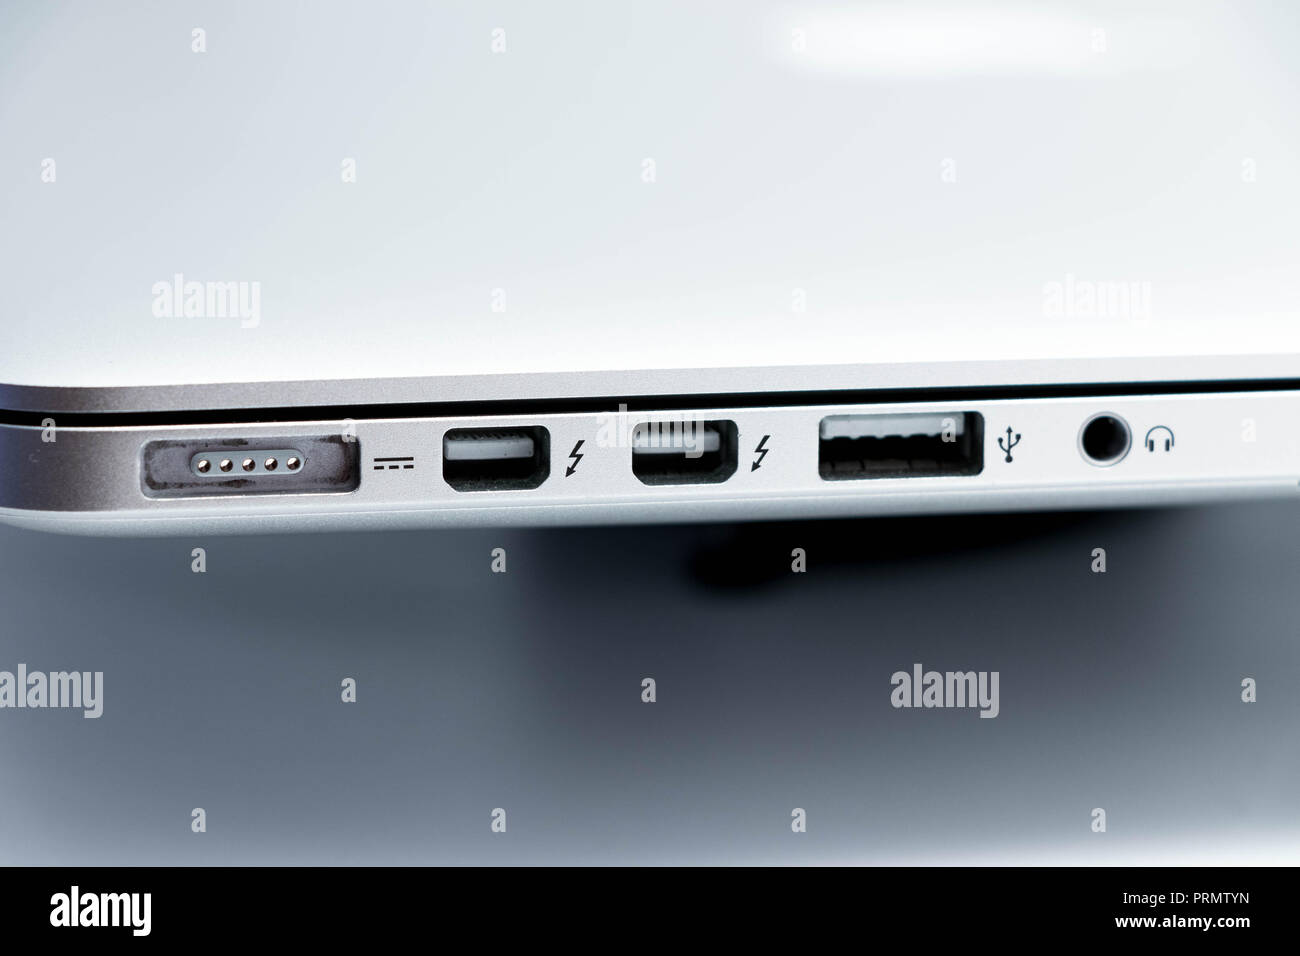 Computer Laptop apple MacBook Pro usb HDMI port Stock Photo - Alamy